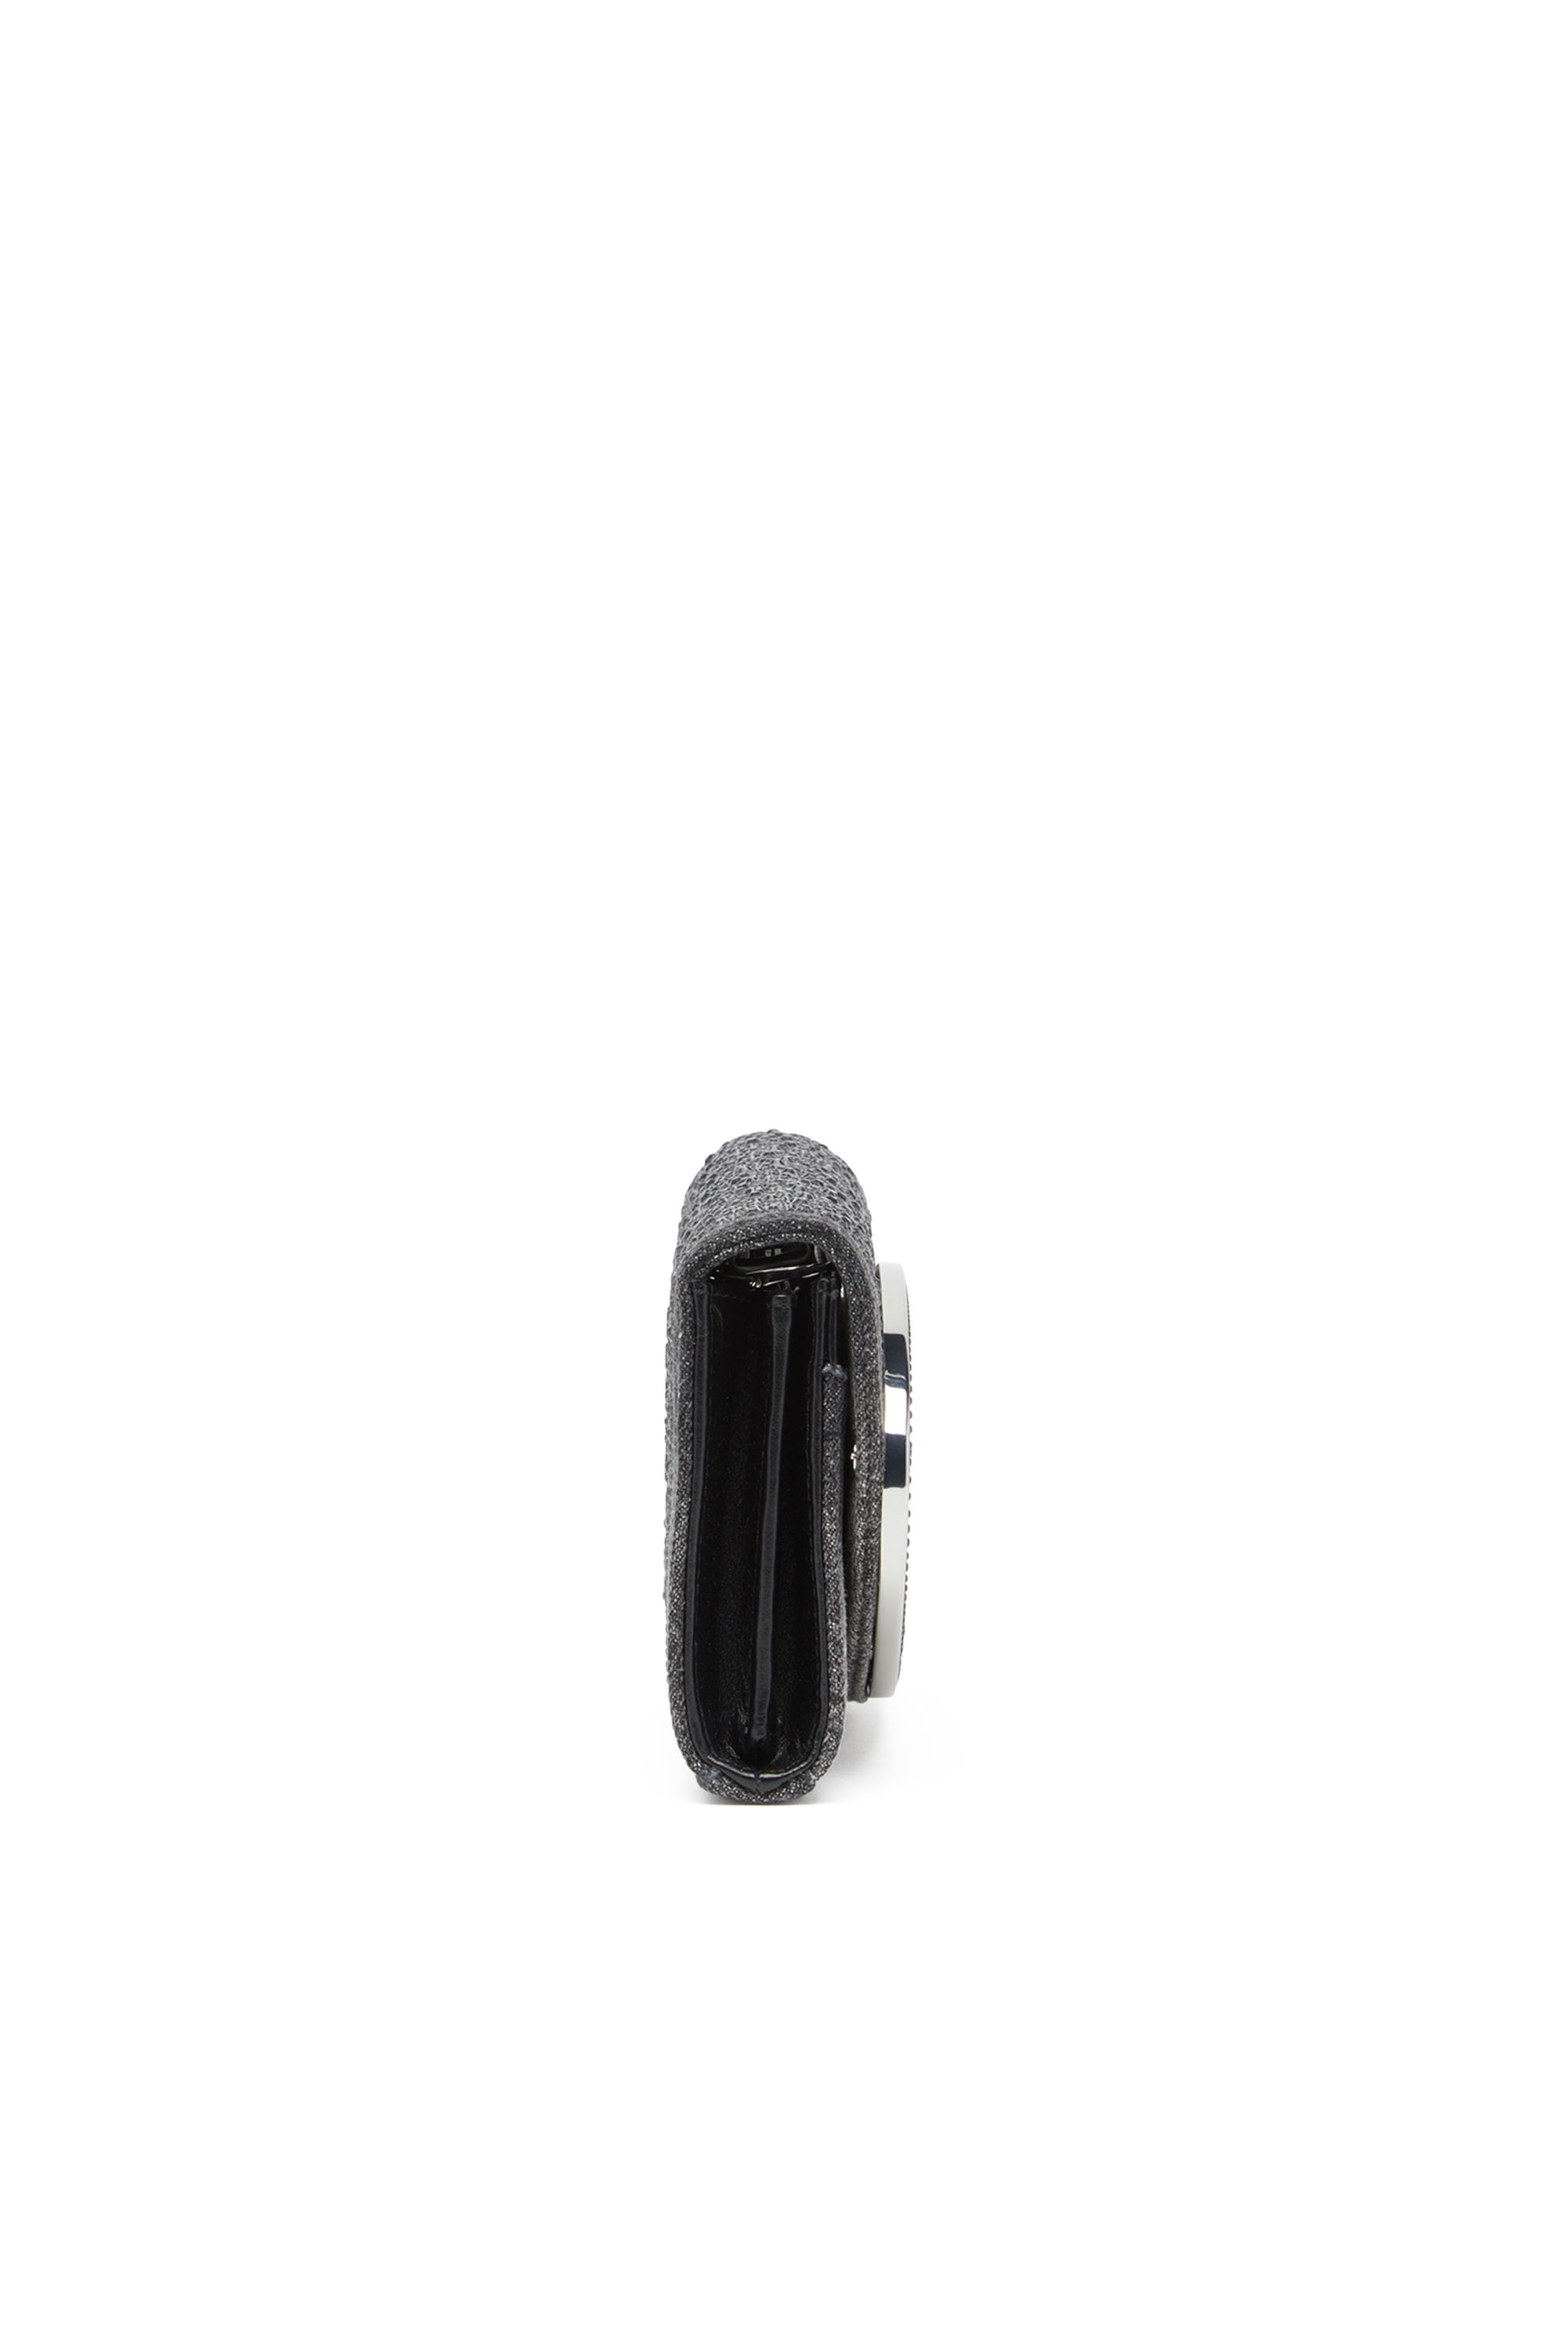 Diesel - 1DR WALLET STRAP, Woman Wallet purse in crystal denim in Black - Image 3